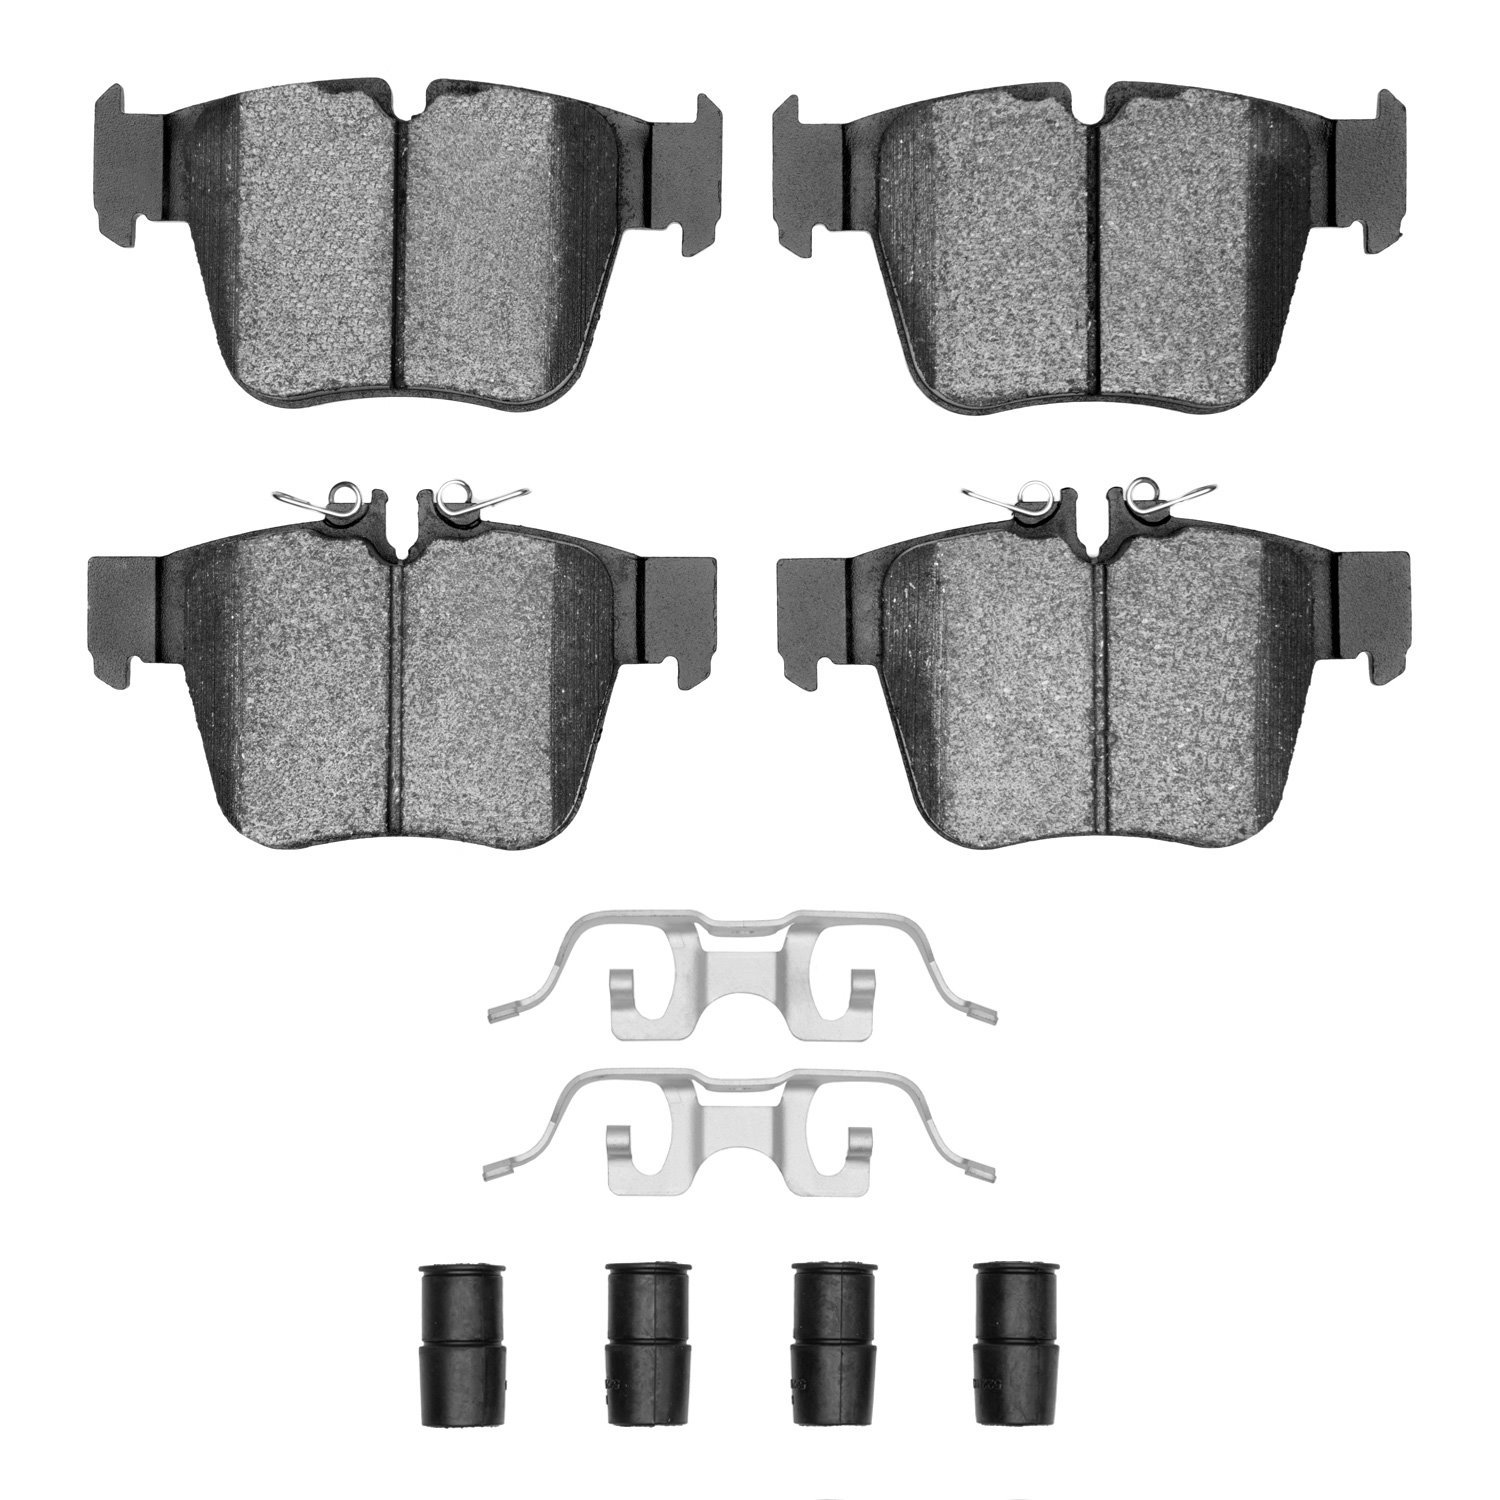 1310-1872-01 3000-Series Ceramic Brake Pads & Hardware Kit, Fits Select Mercedes-Benz, Position: Rear